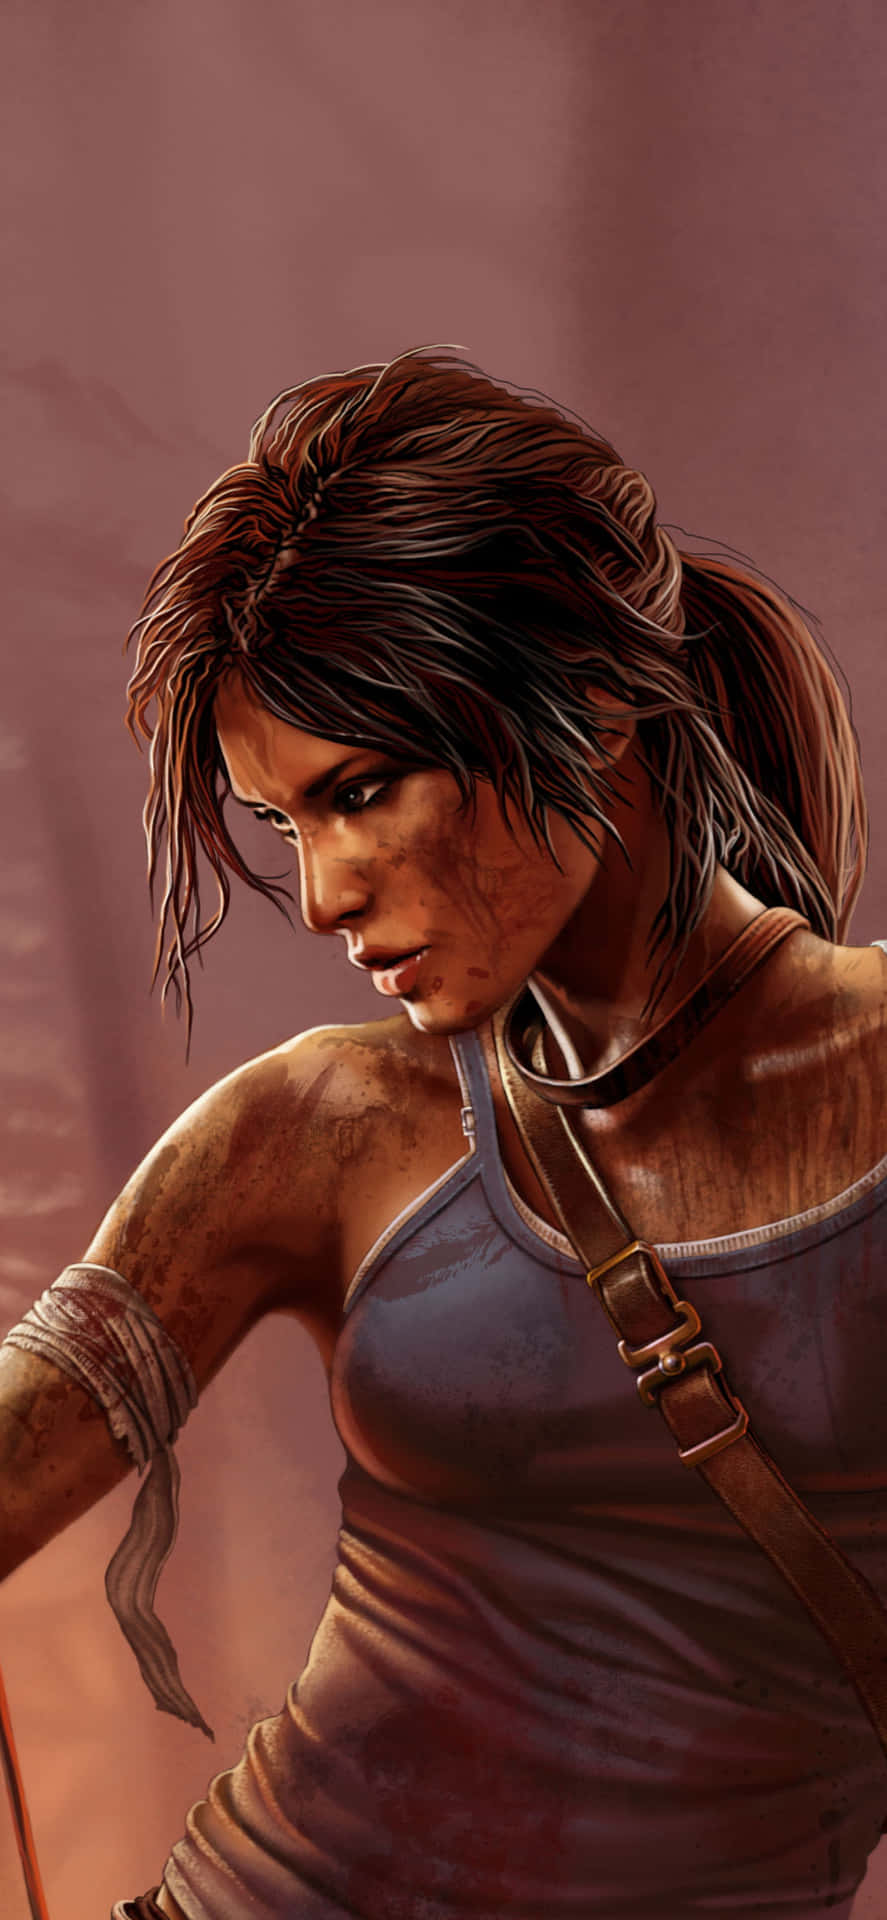 Androidrise Of The Tomb Raider Bakgrund Skulder